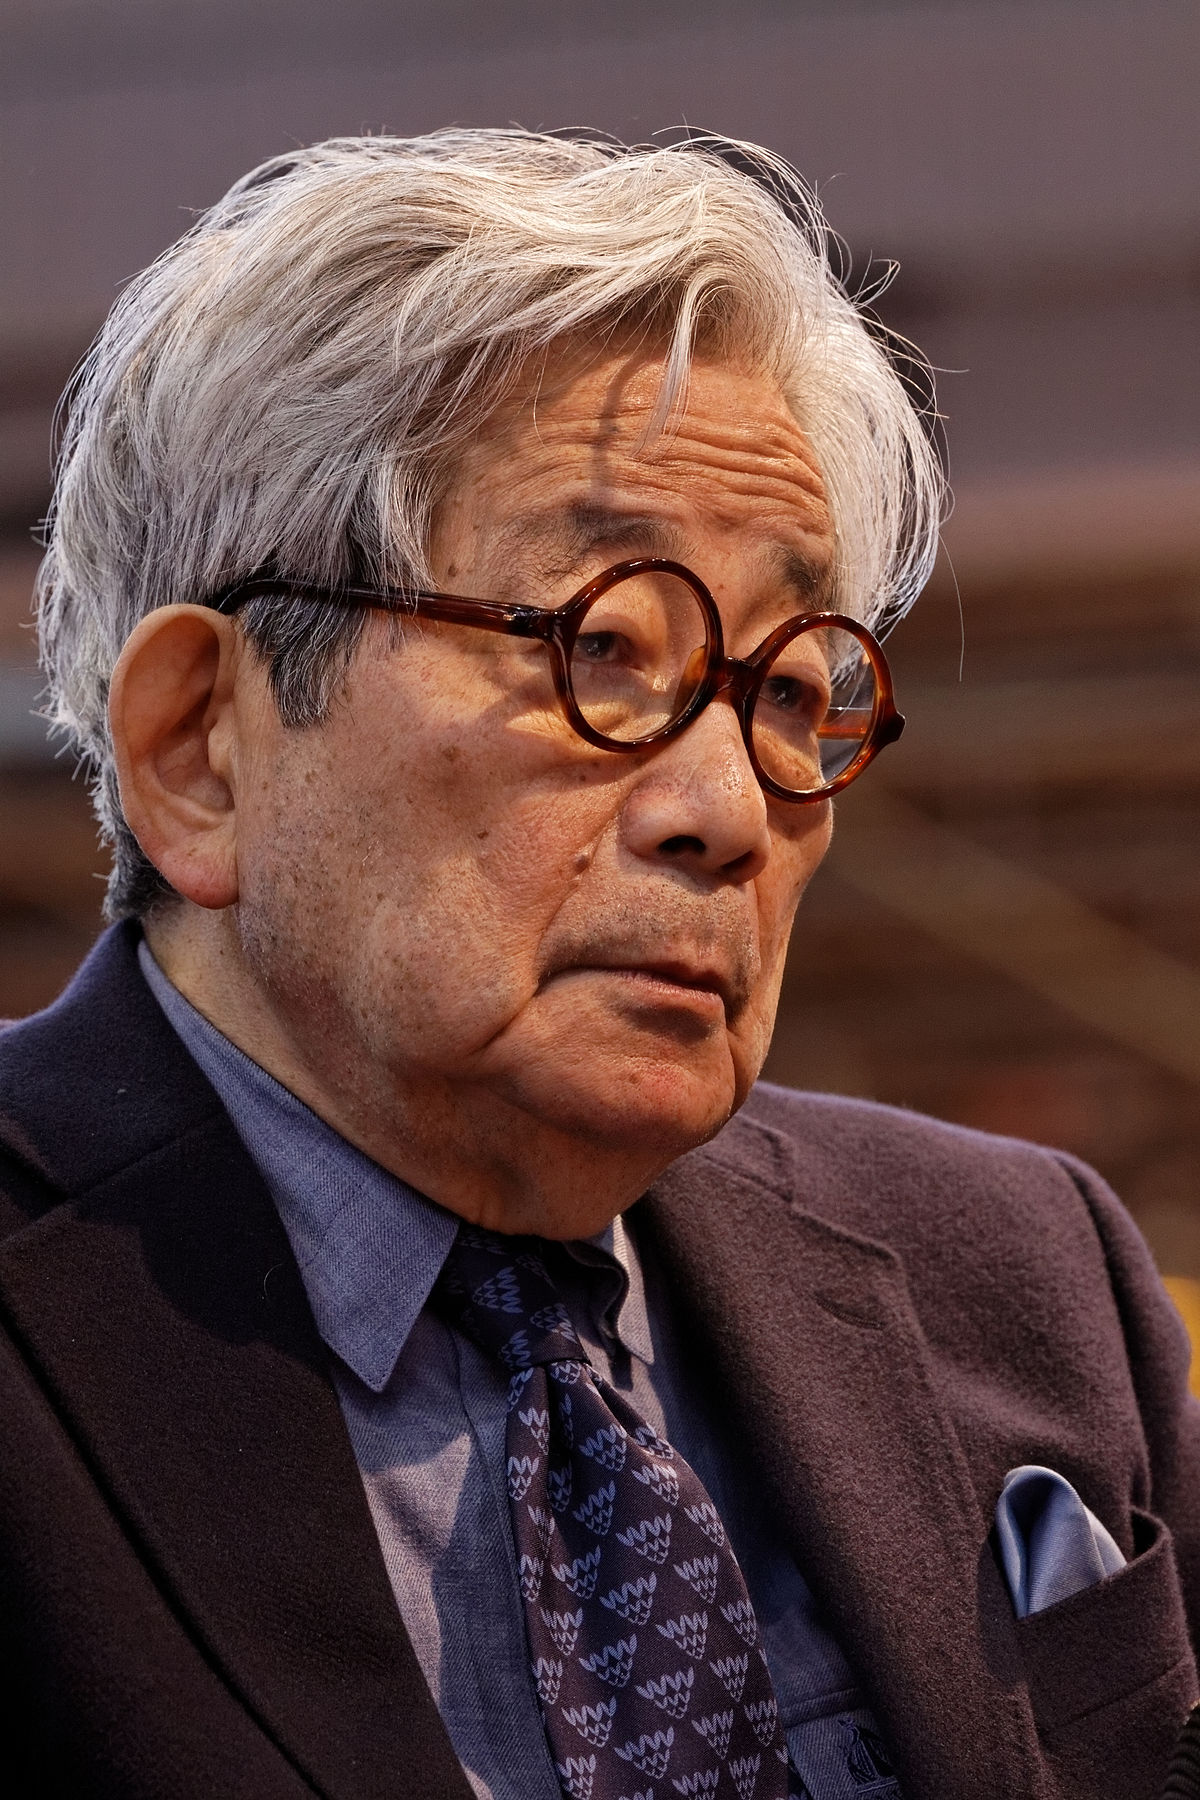 Nobel laureate Kenzaburo Oe, who wrote of war and his son, dies at 88 